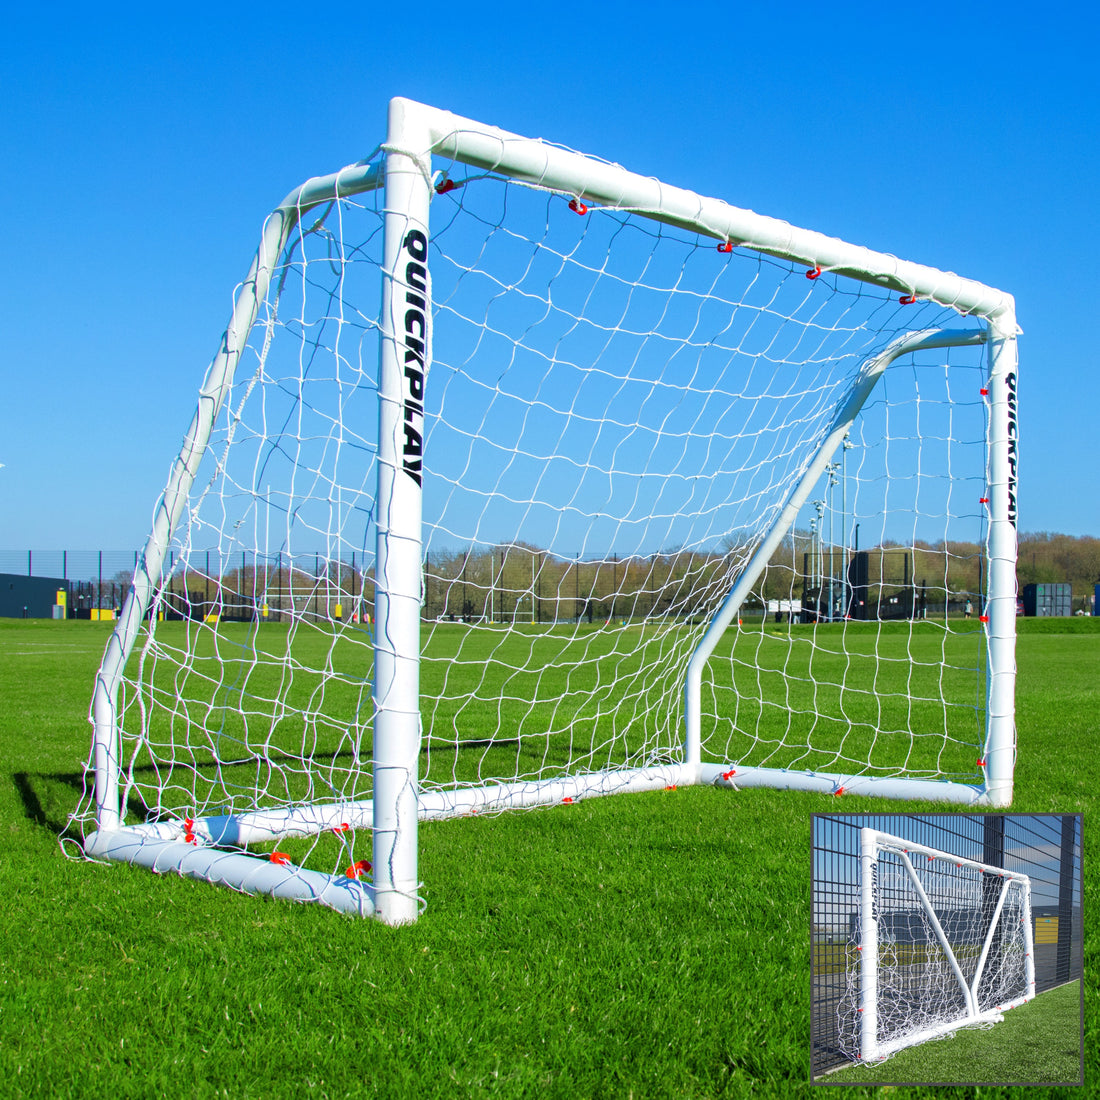 Q-FOLD Match Folding Soccer Goal 6x4'